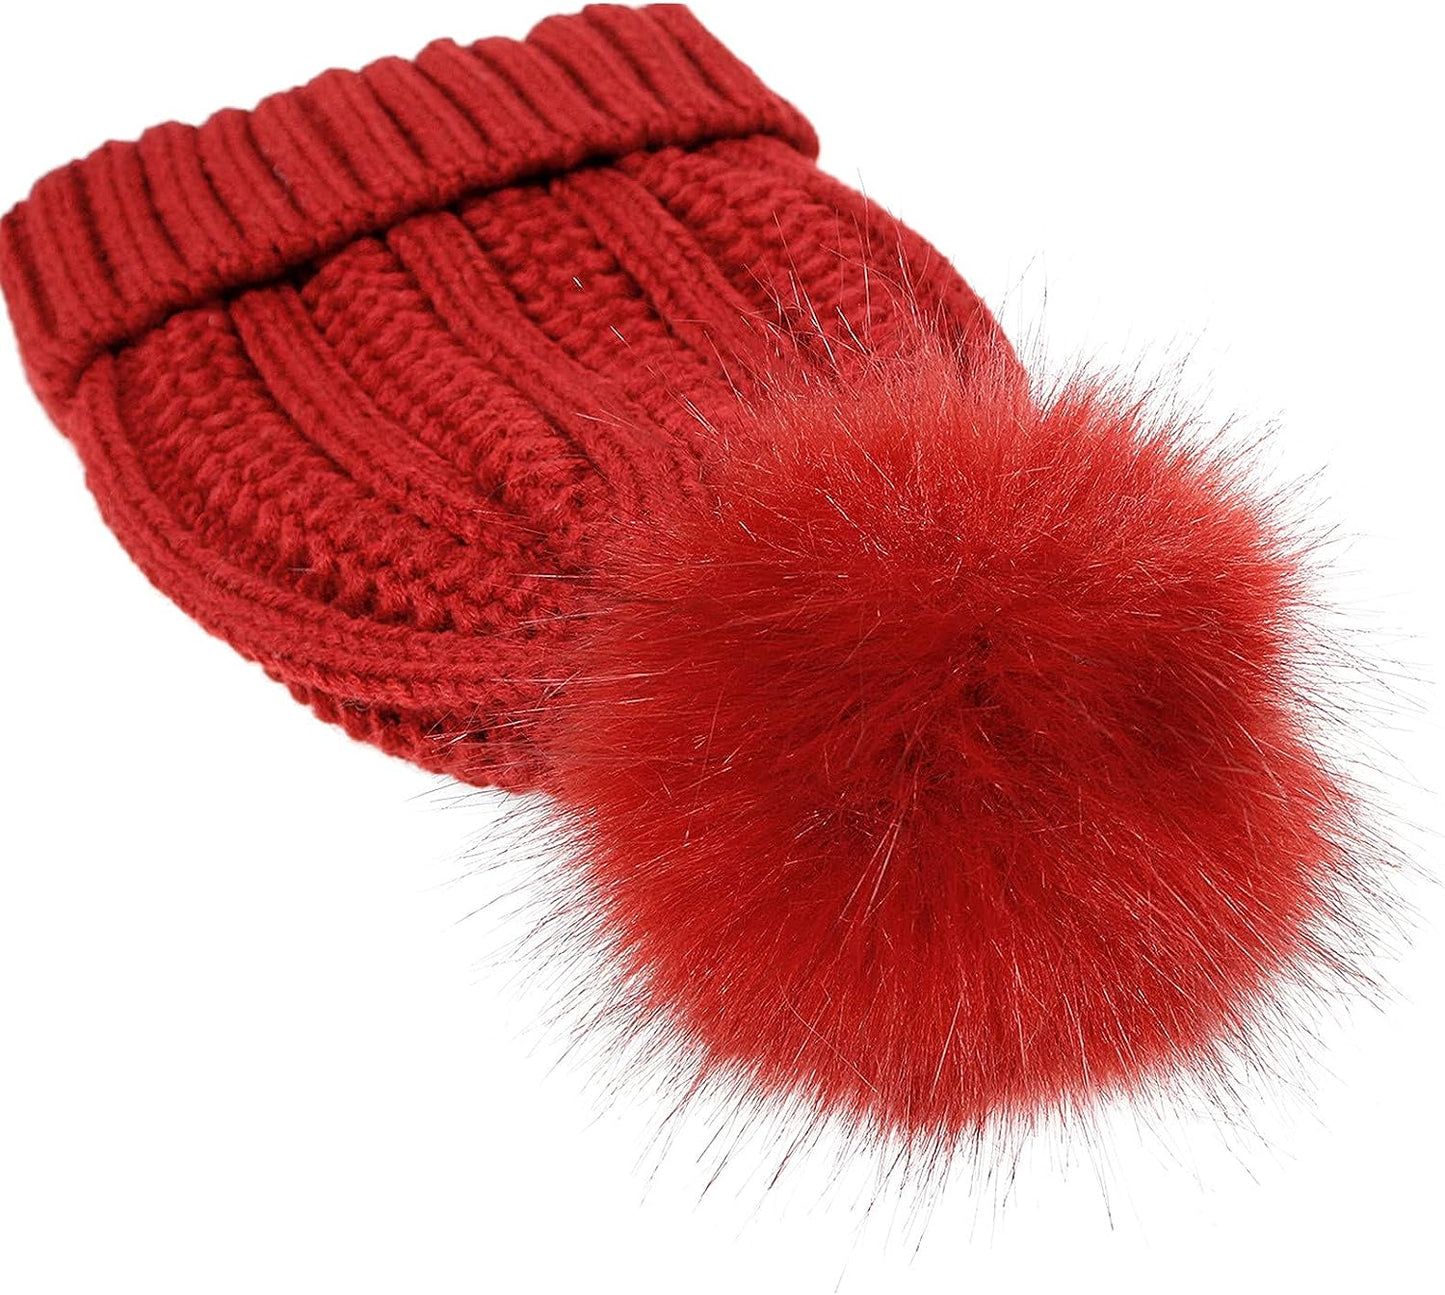 RED | Knit Beanie with Satin Lining and Pom Pom